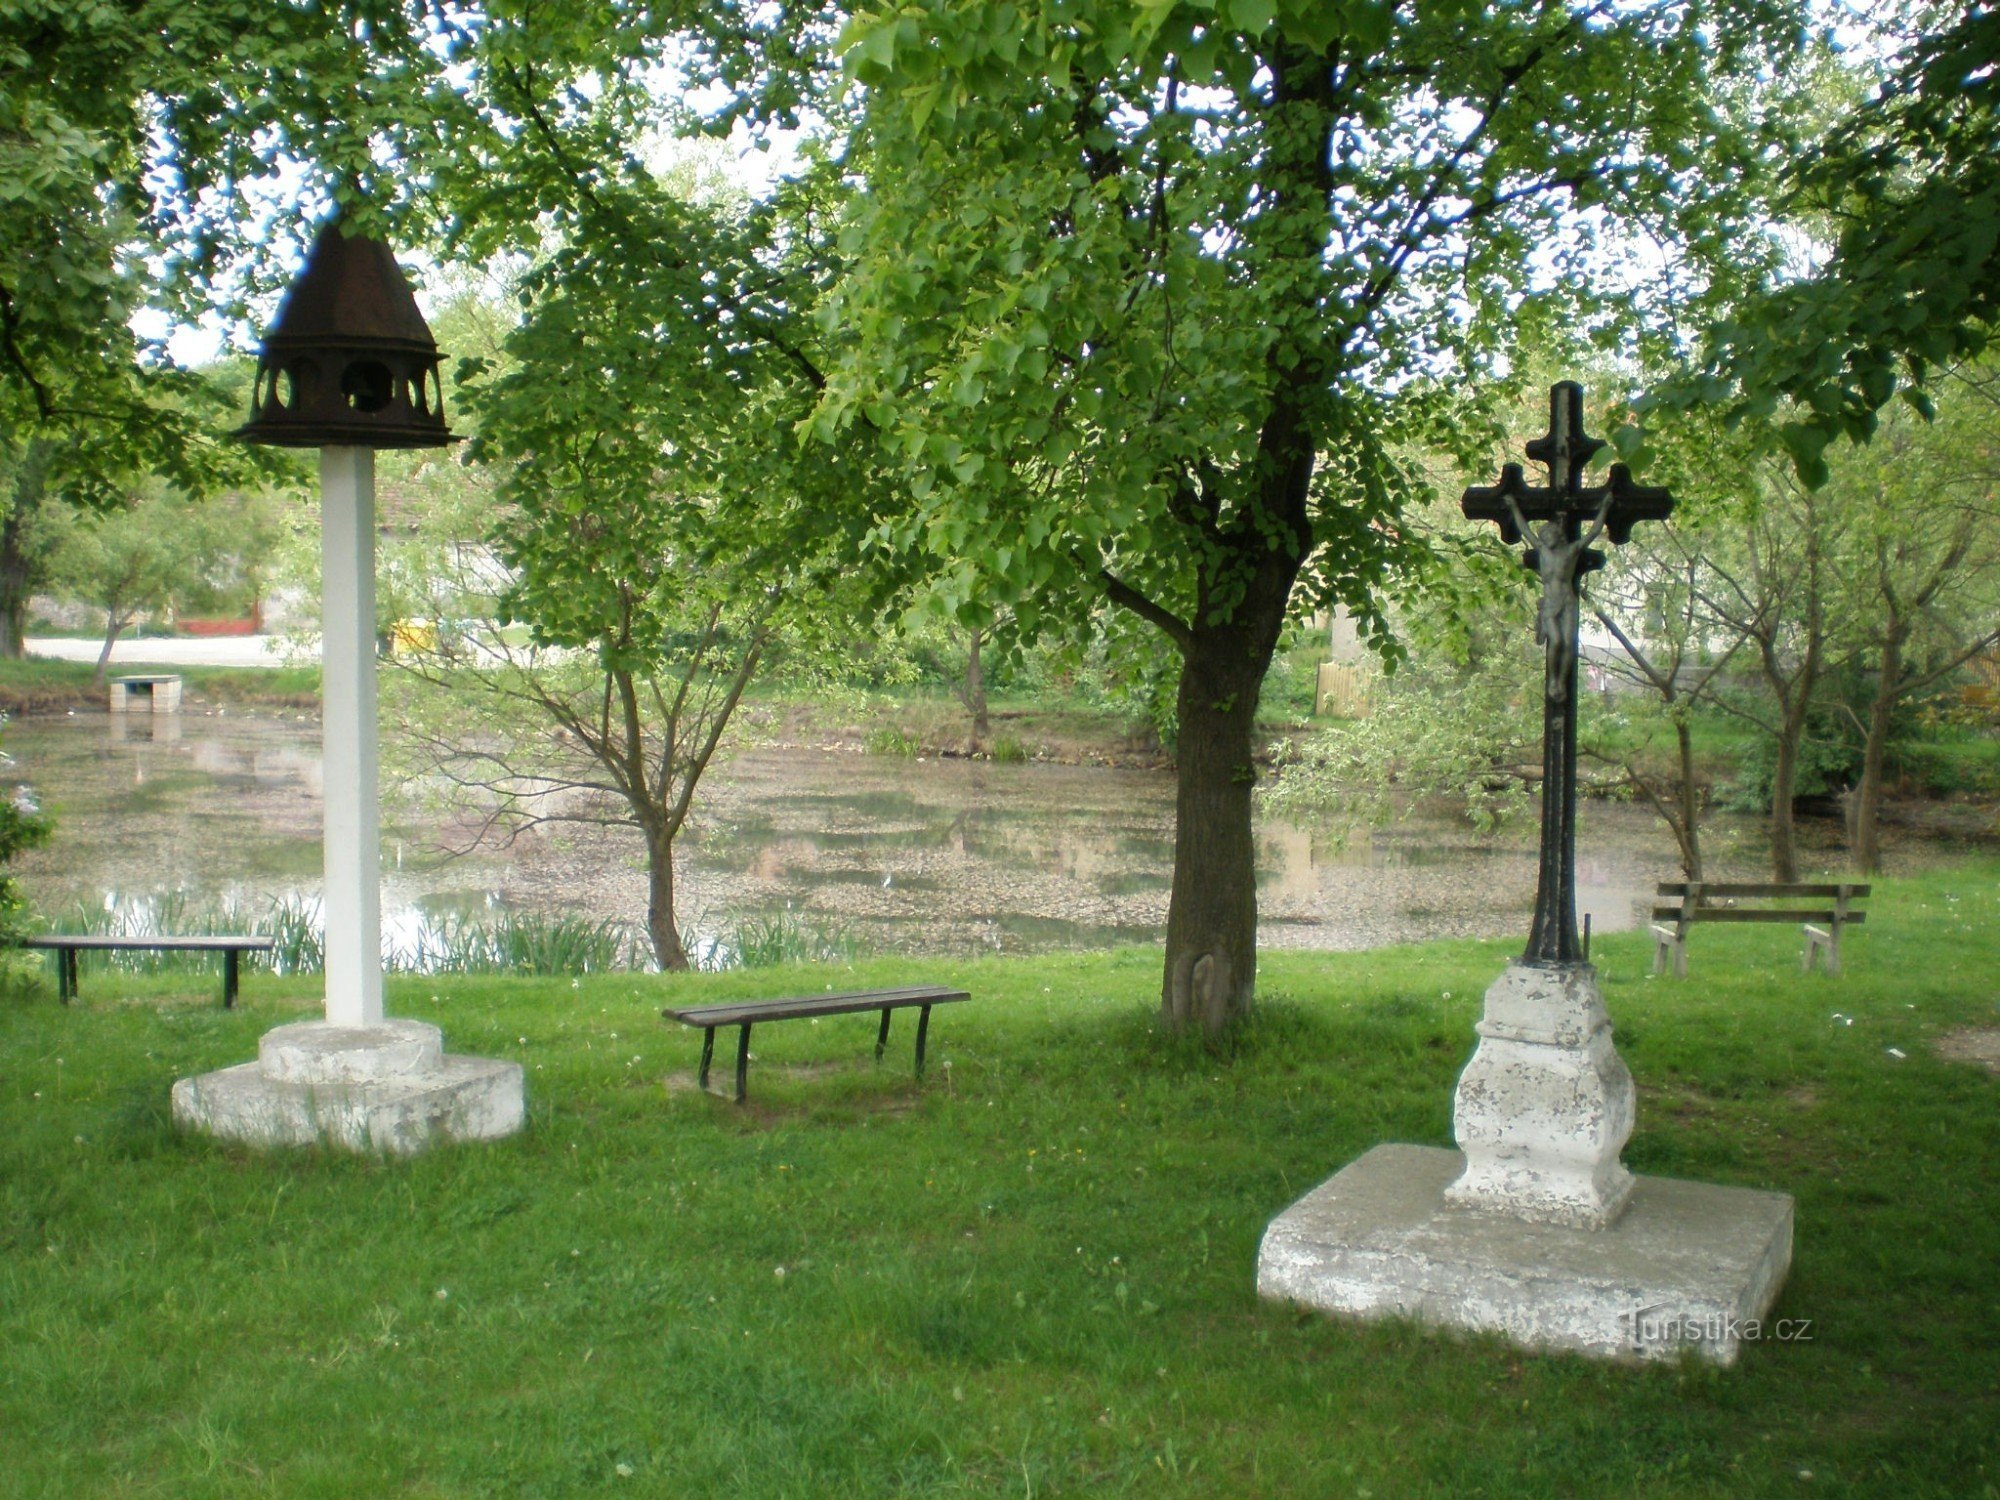 Miškovice - cruce și clopot